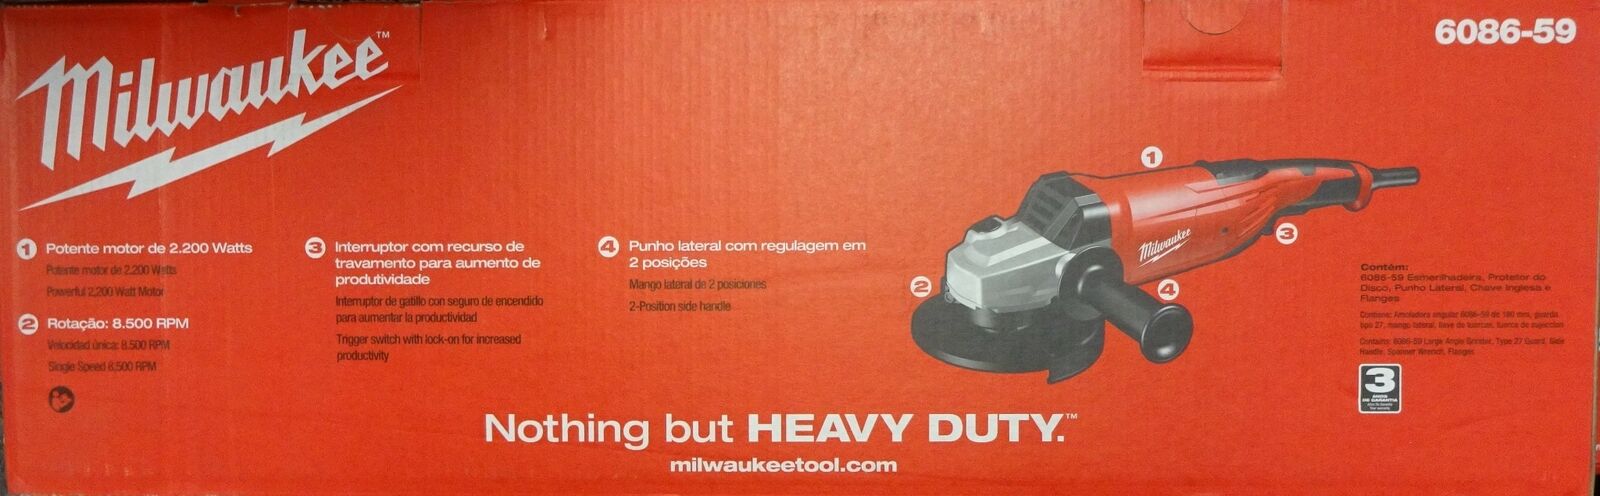 Milwaukee 6086-59 180mm Angle Grinder 220V Type C Plug (Intl. model)